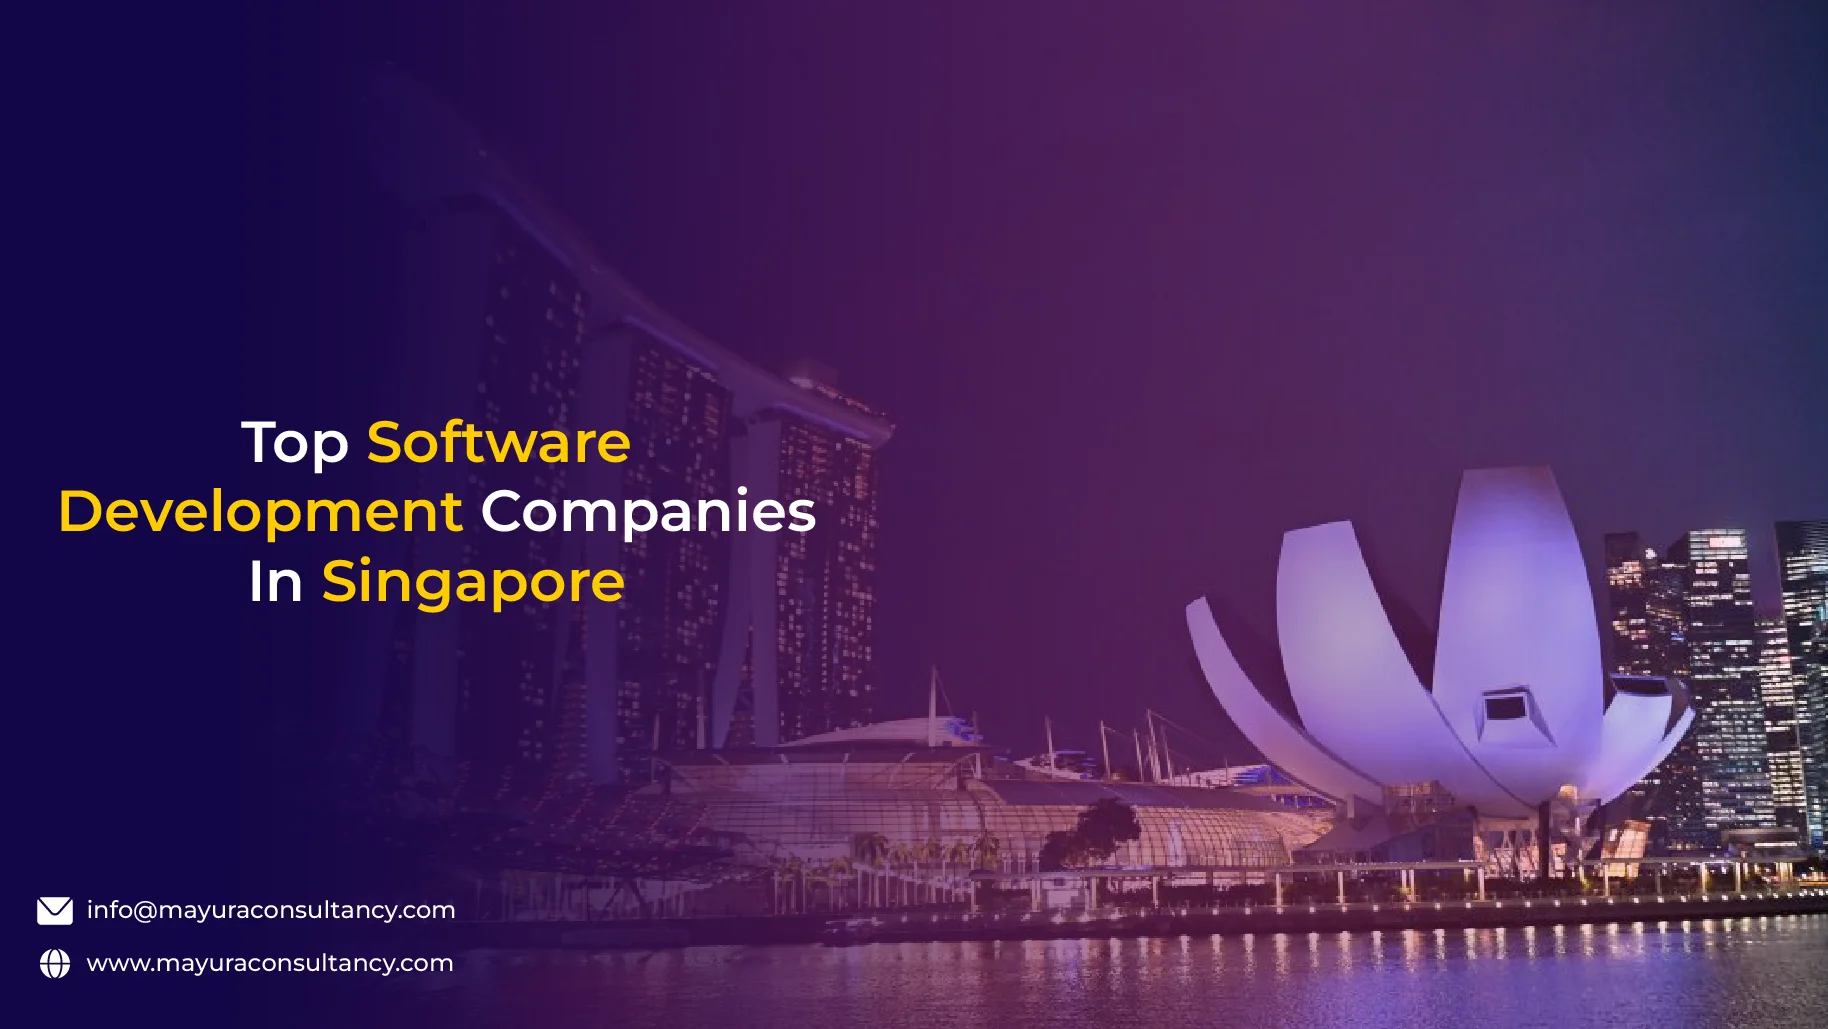 Top Software Development Companies in Singapore